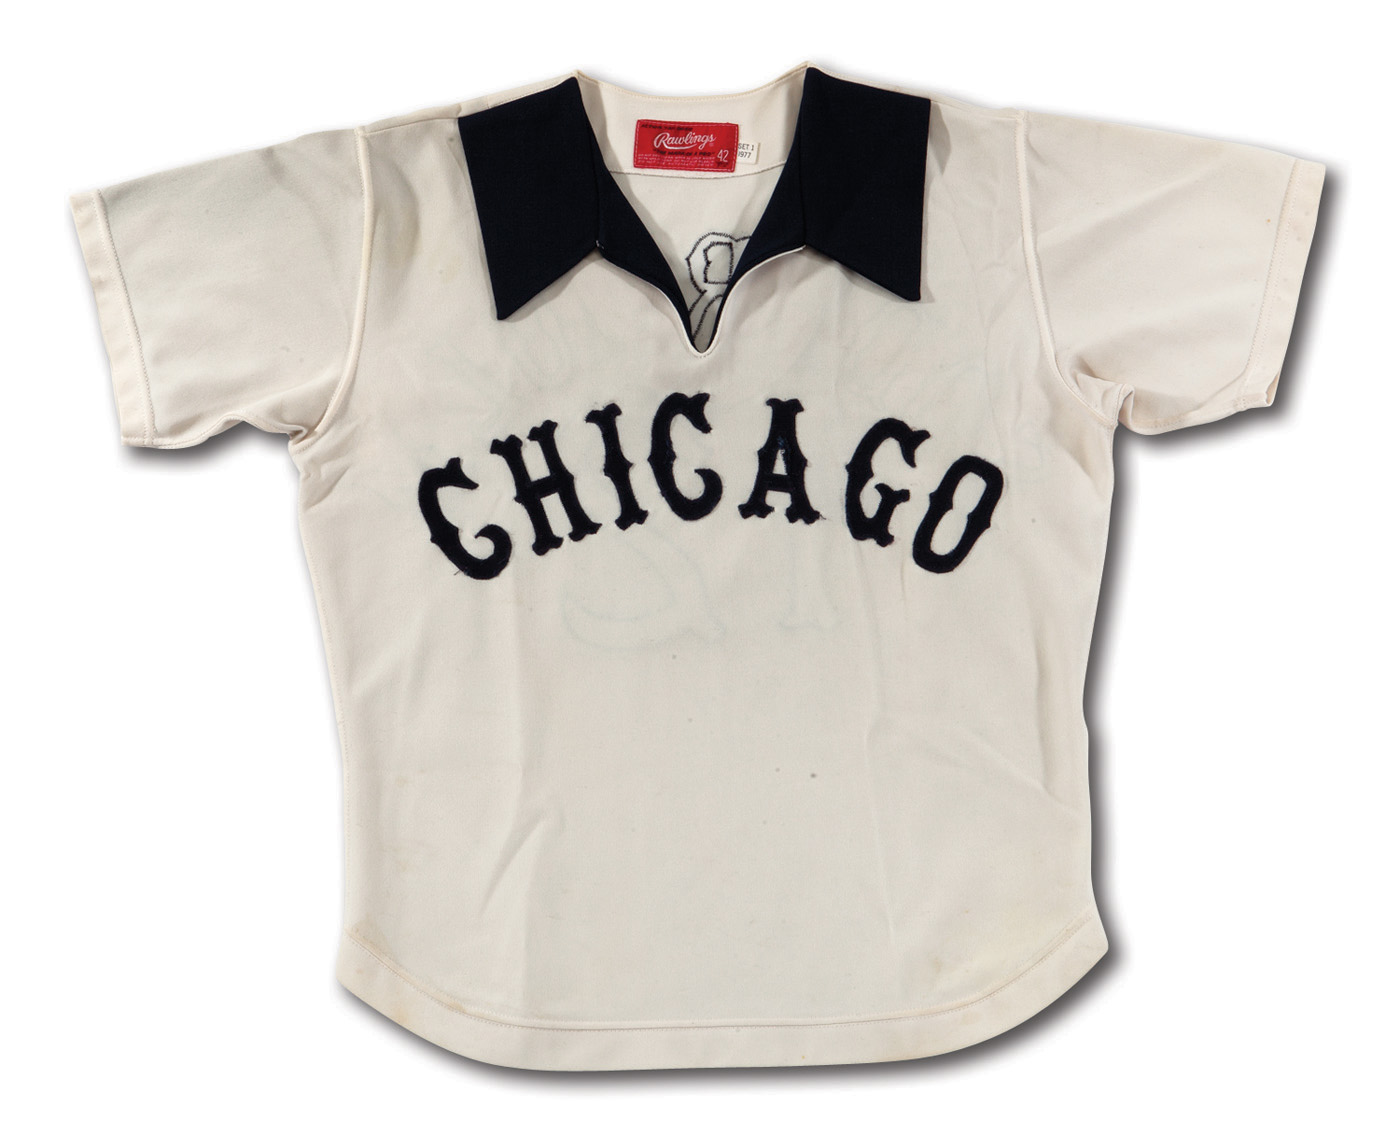 1977 white sox jersey